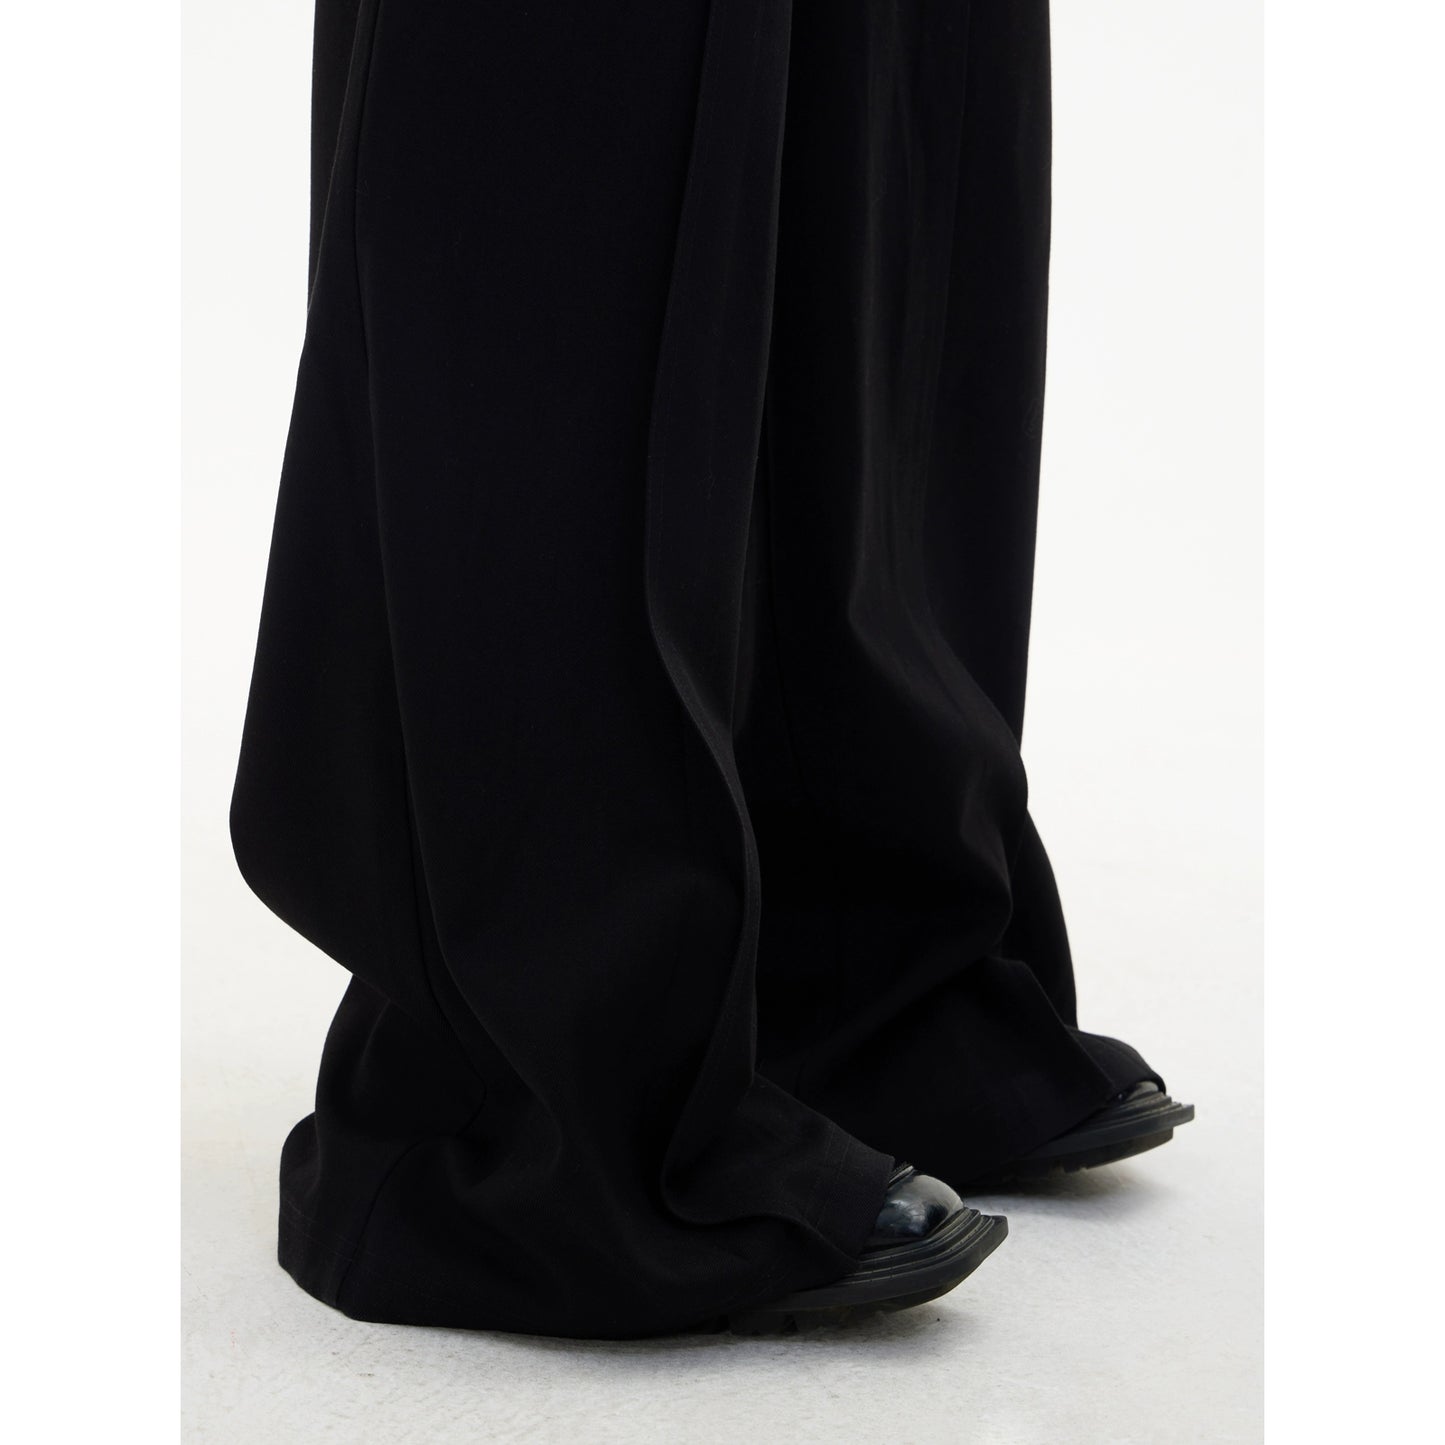 Silhouette tasca anteriore -Drape Pantaloni casual